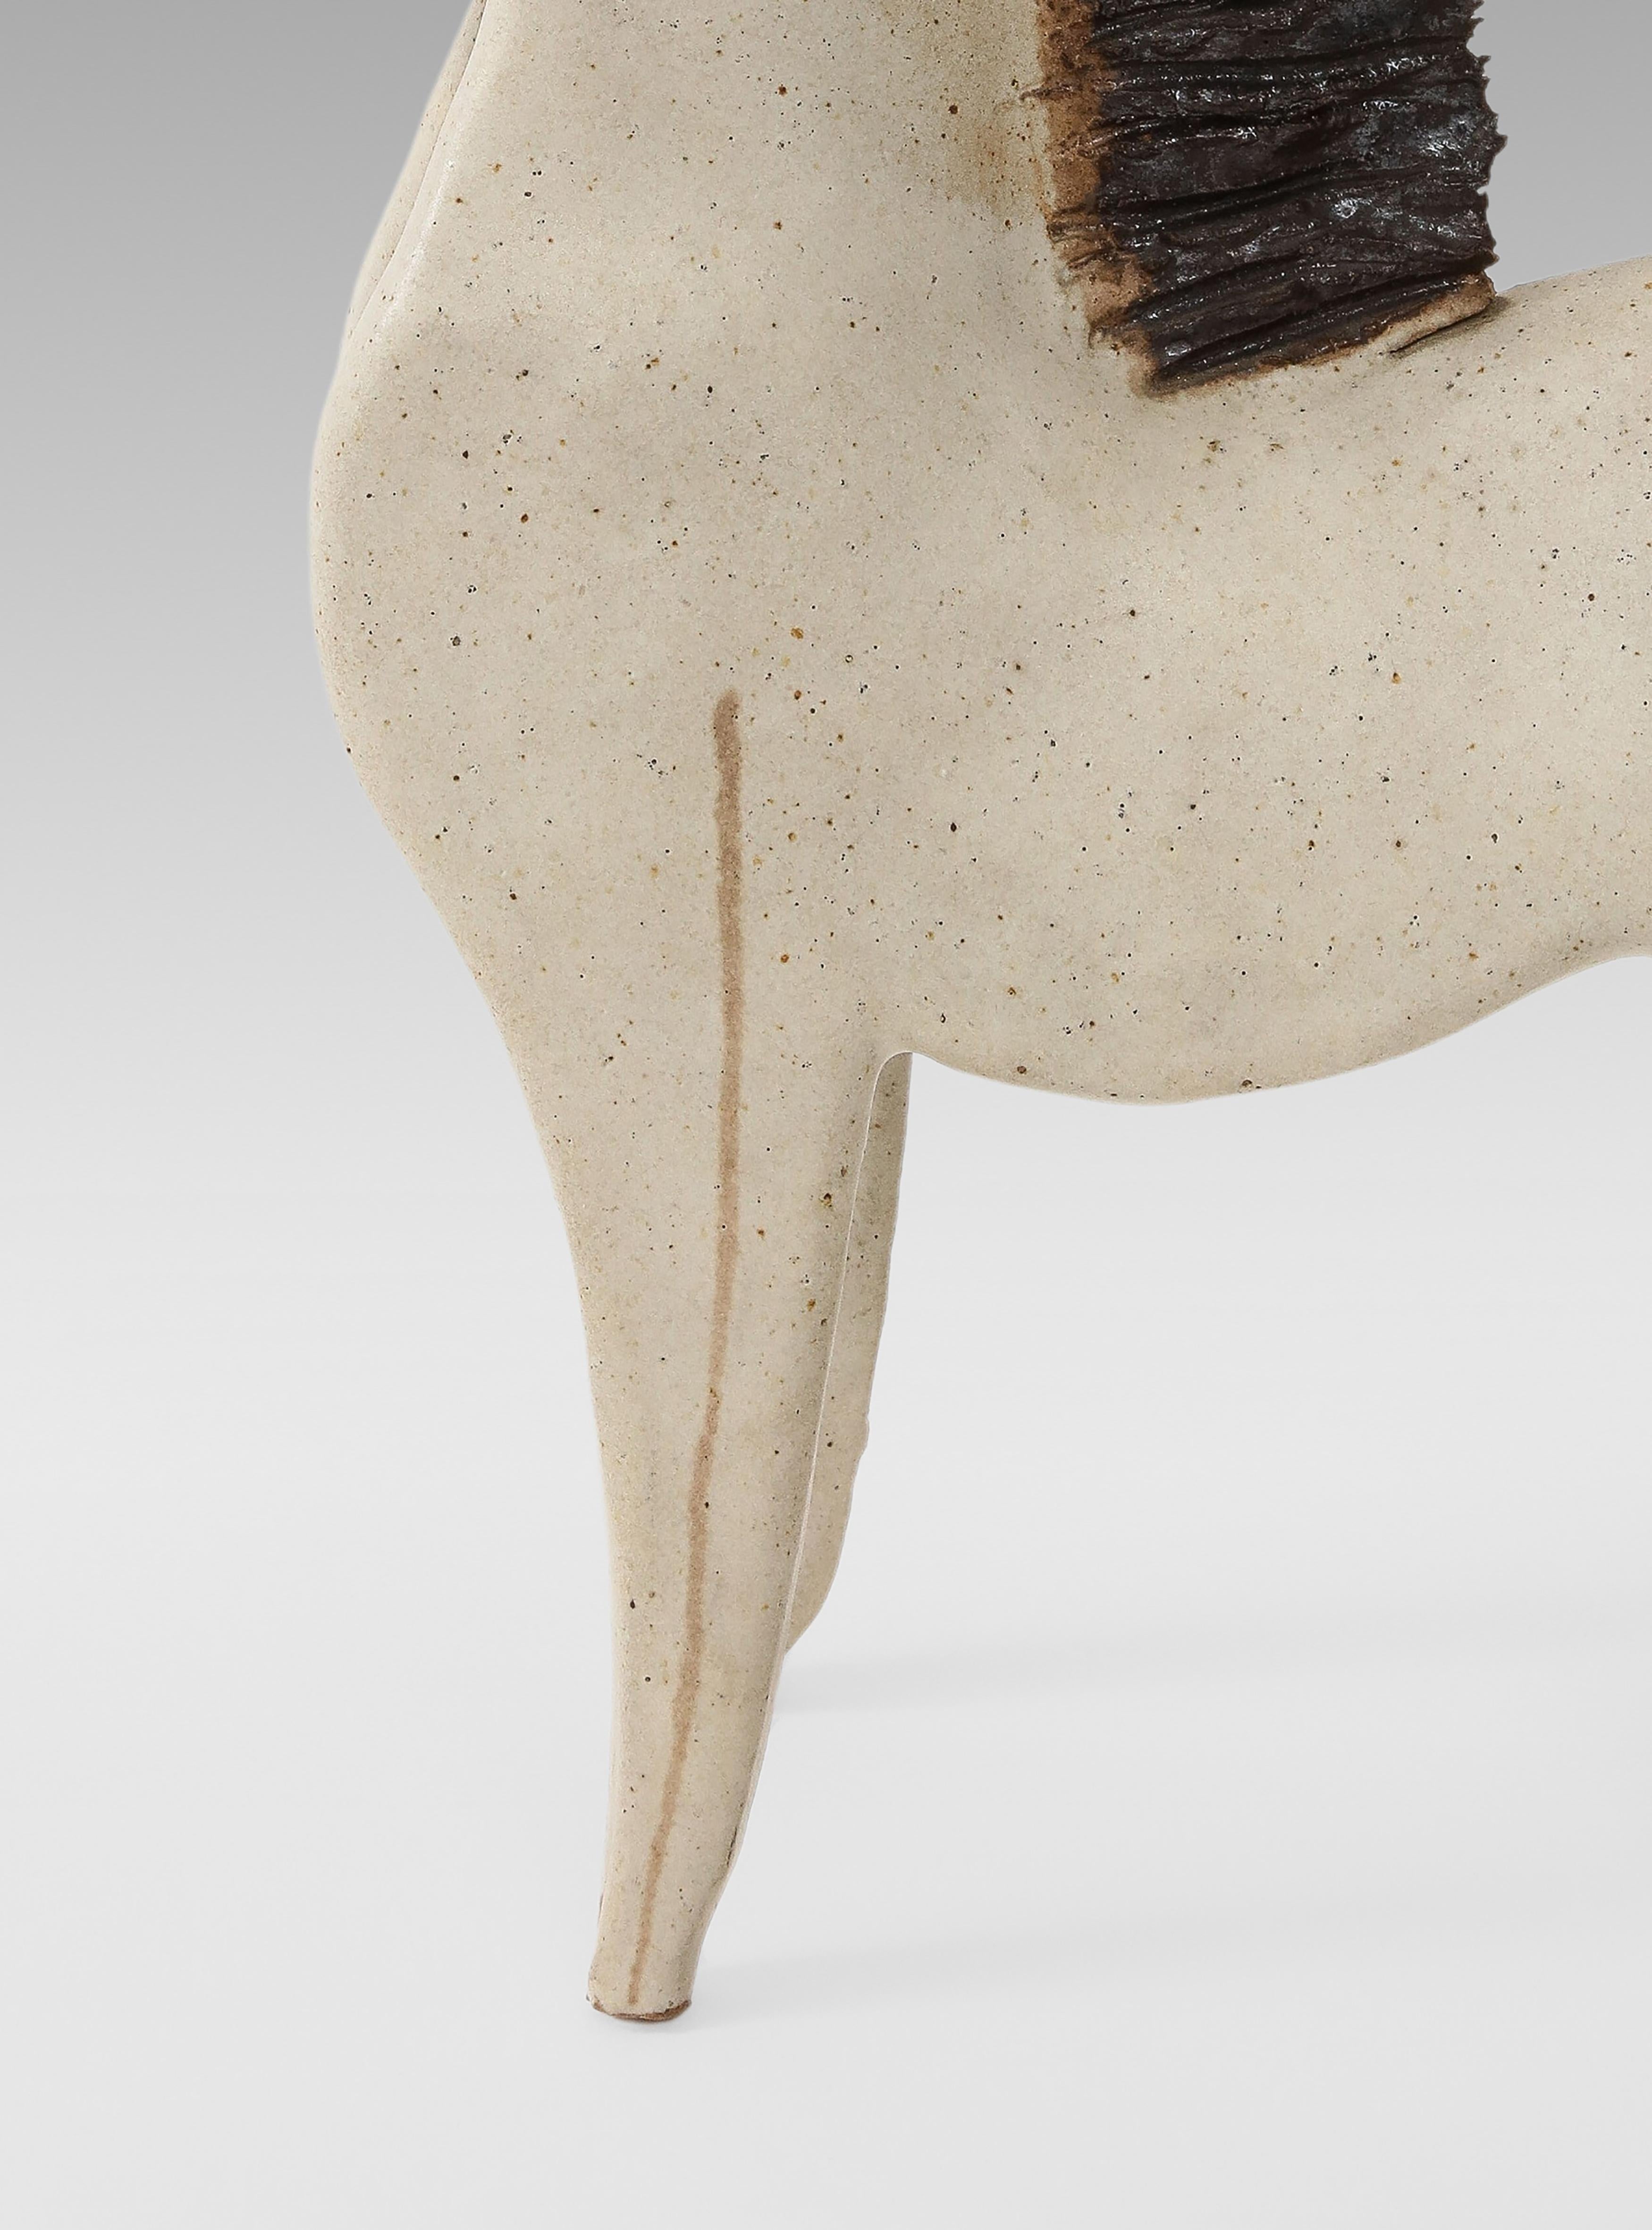 Bruno Gambone Glazed Ceramic Horse Sculpture, Italy, 1970s For Sale 4